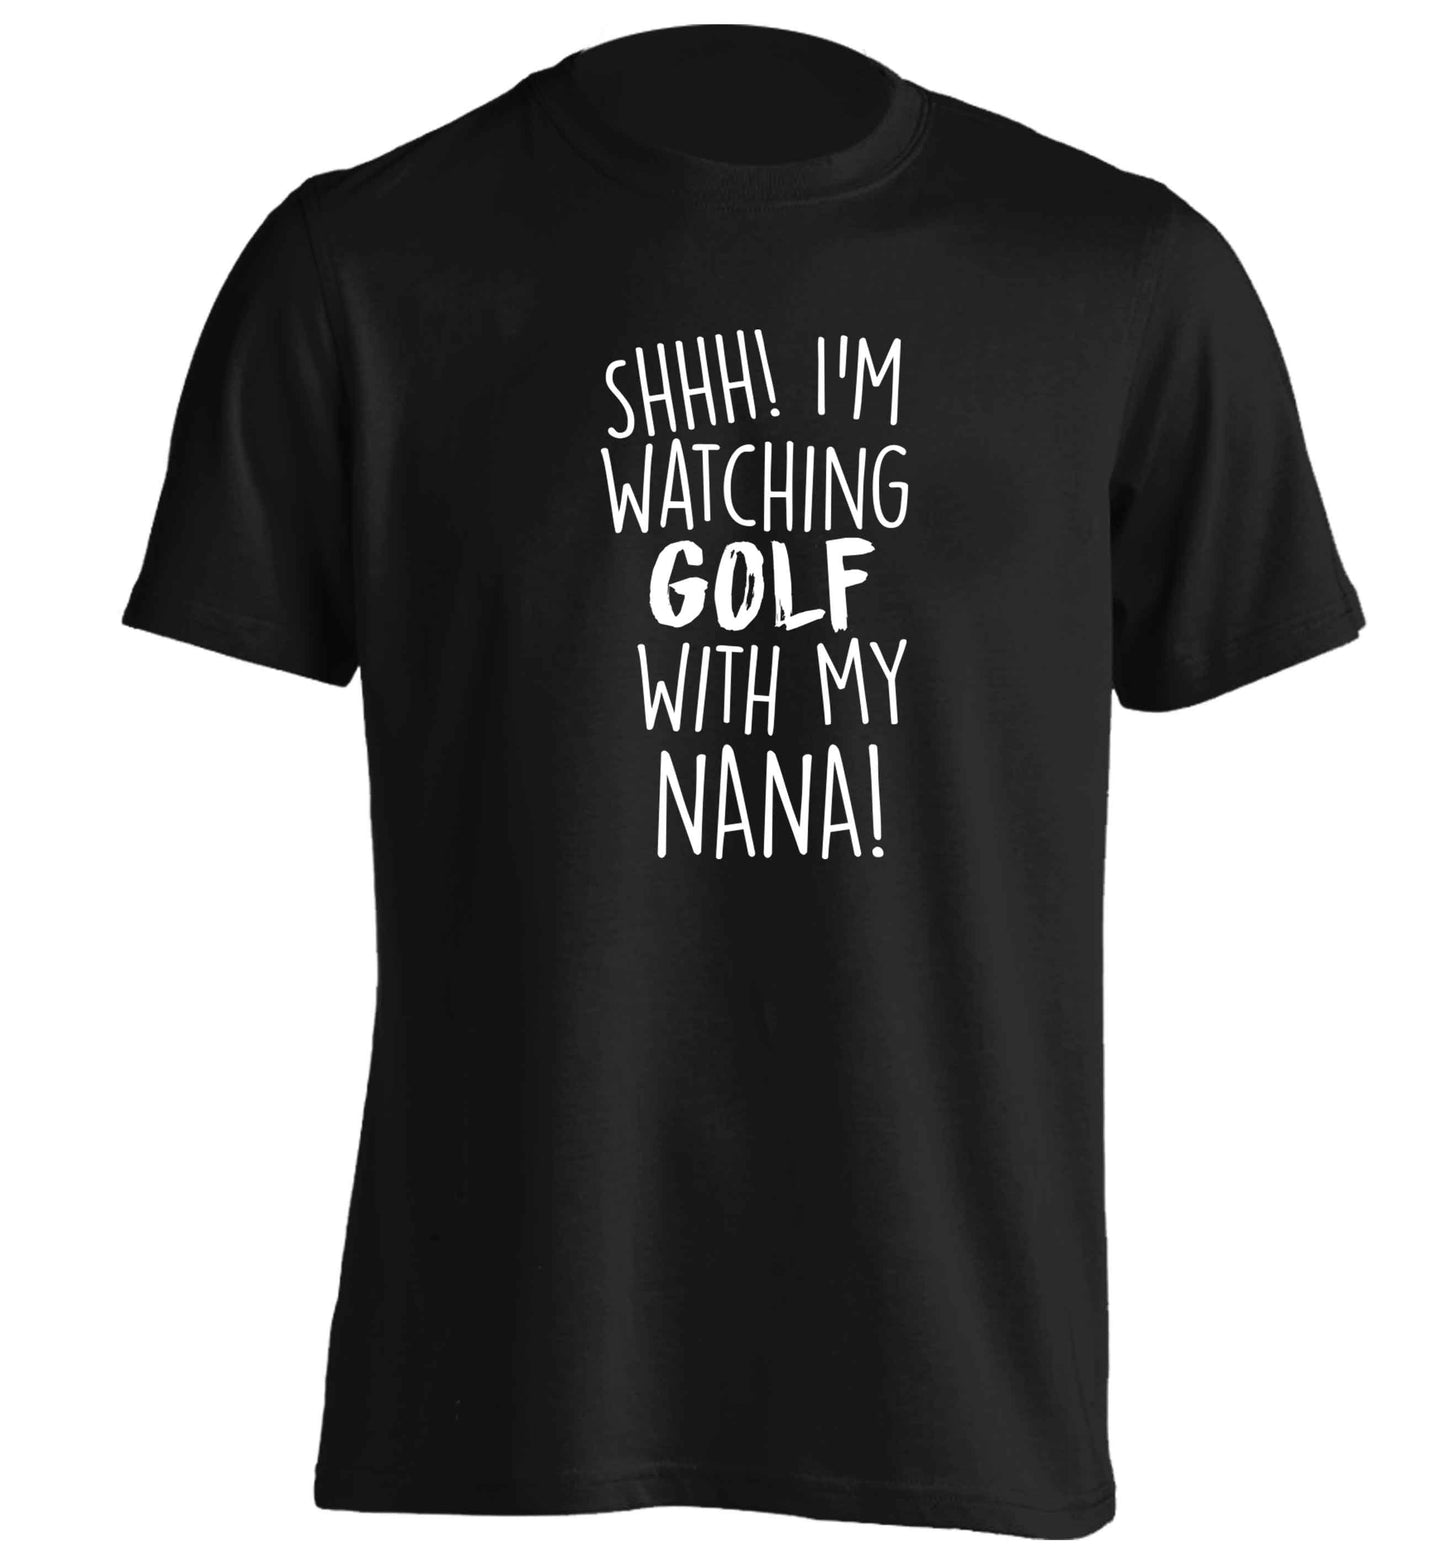 Shh I'm watching golf with my nana adults unisex black Tshirt 2XL